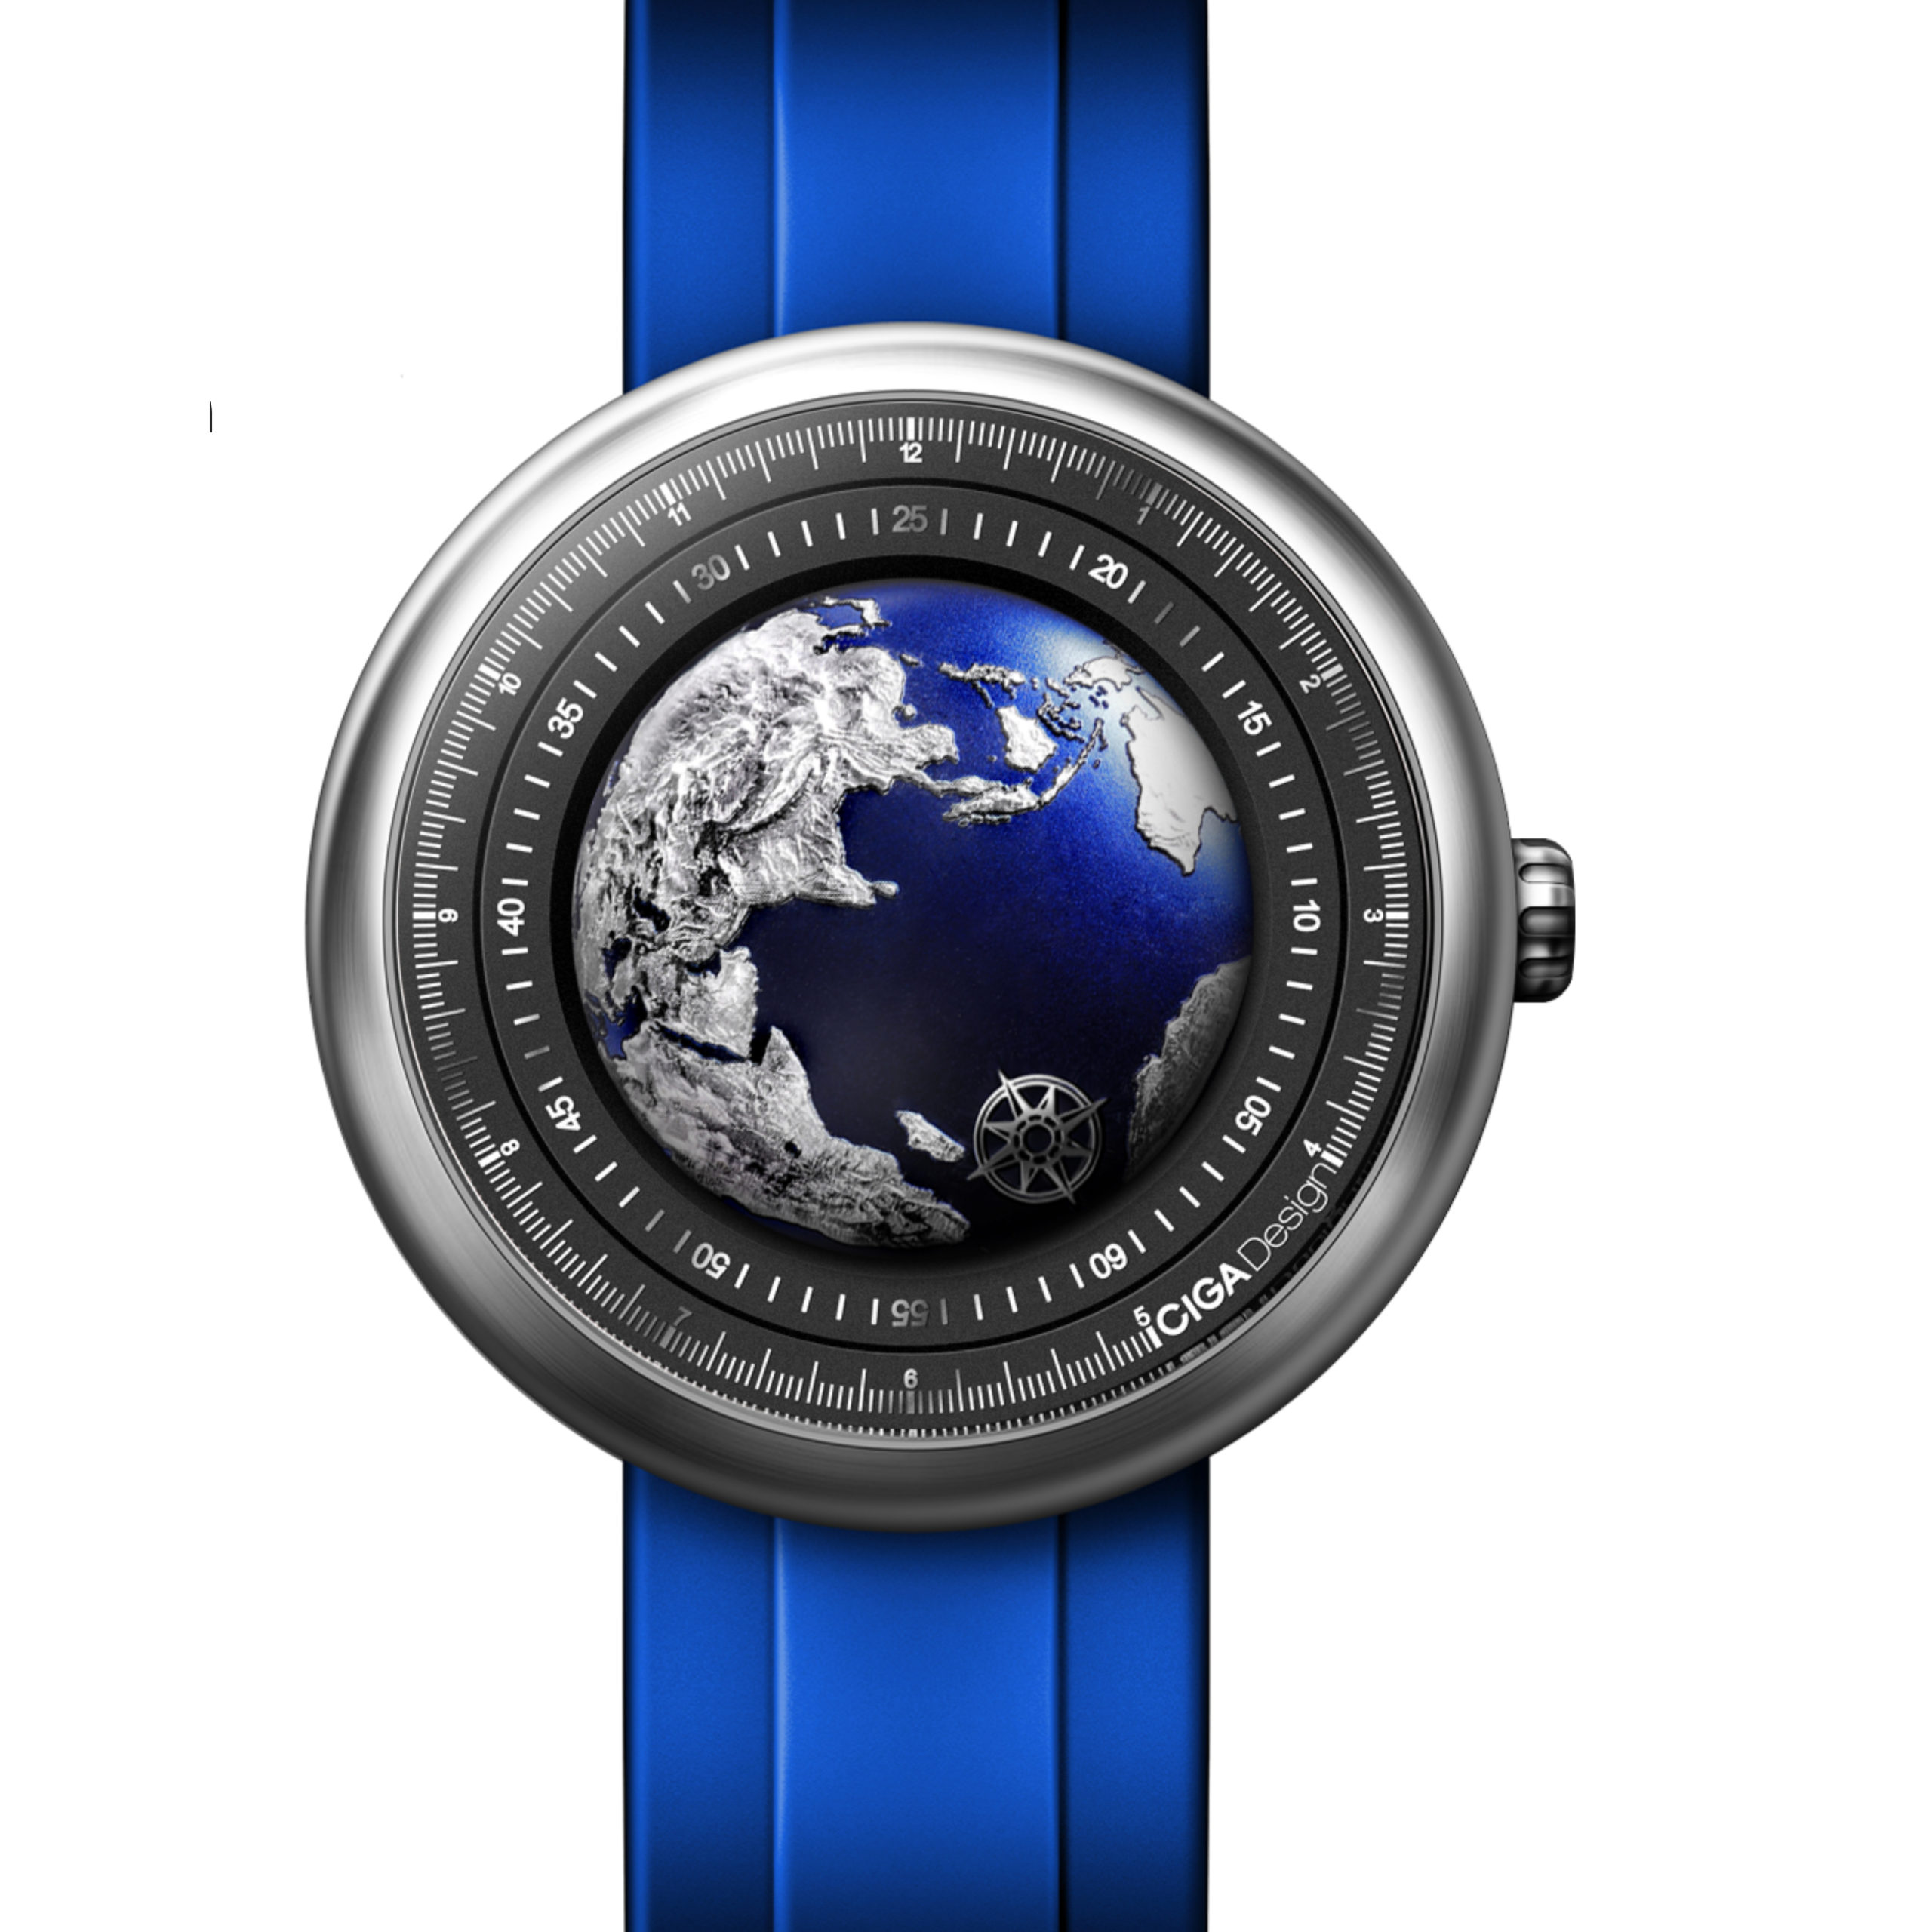 CIGA Design Blue Planet winning watch of the Challenge watch Prize 2021